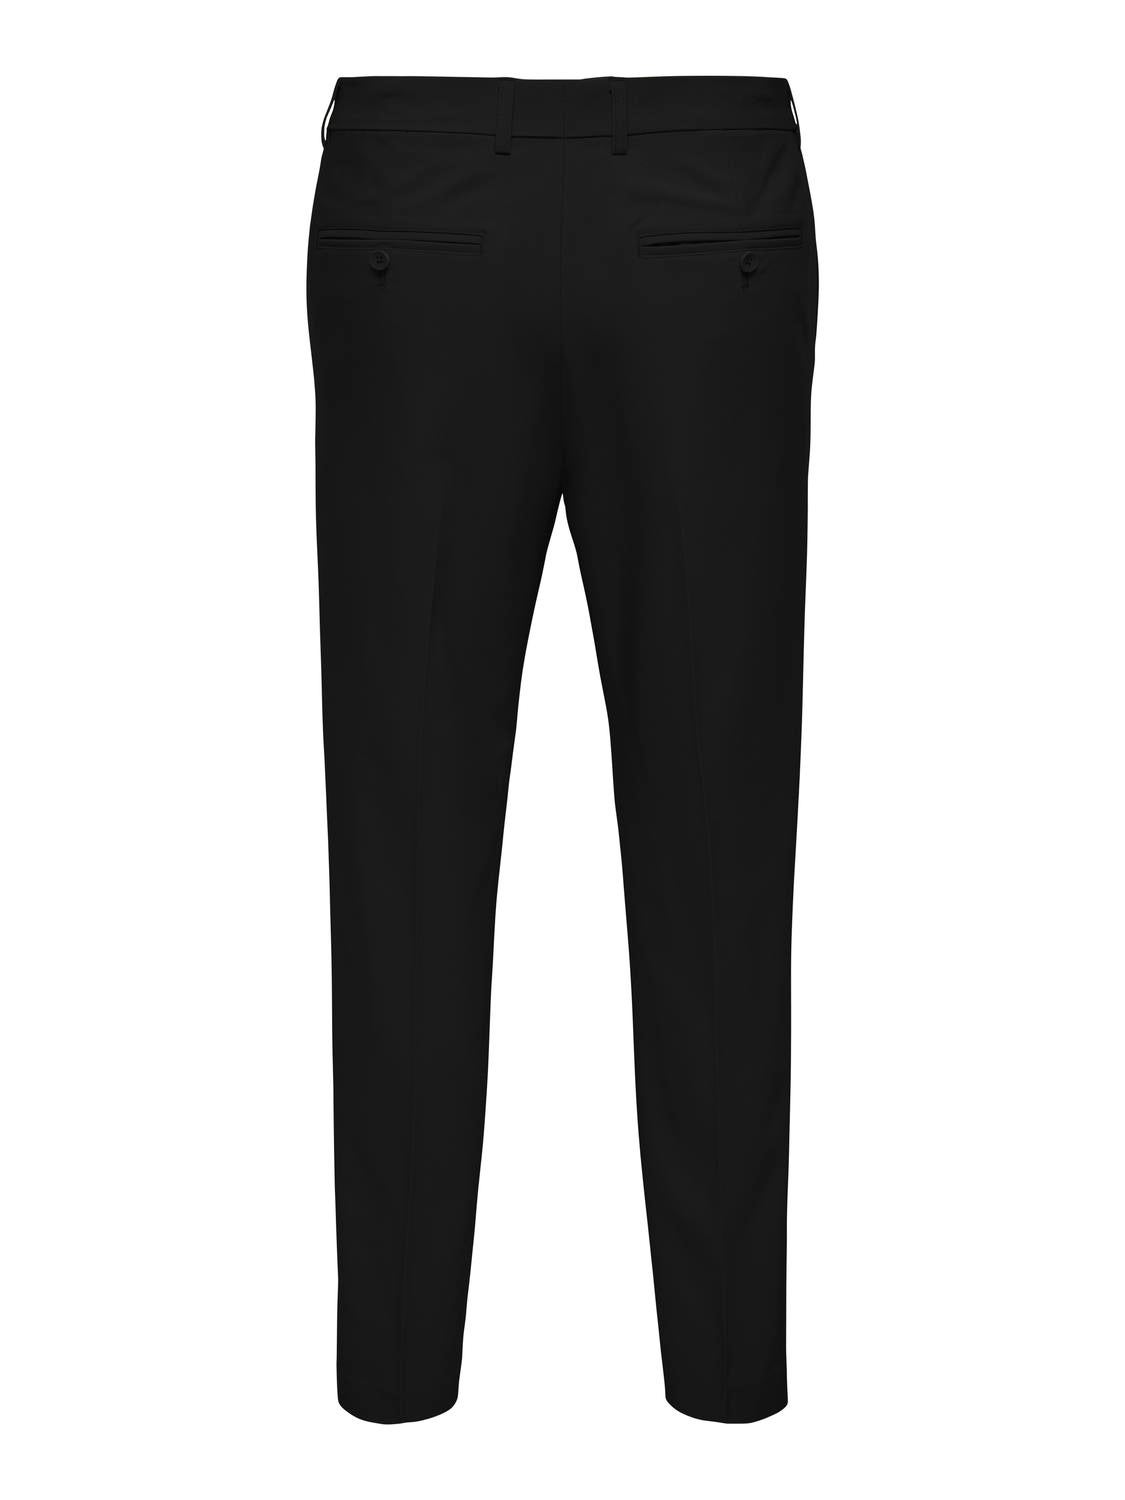 fvwitlyh Black Pants Mens Pants Slim Fit Solid Color Skinny Trousers  Classic Dress Business Wedding Suit Pants - Walmart.com